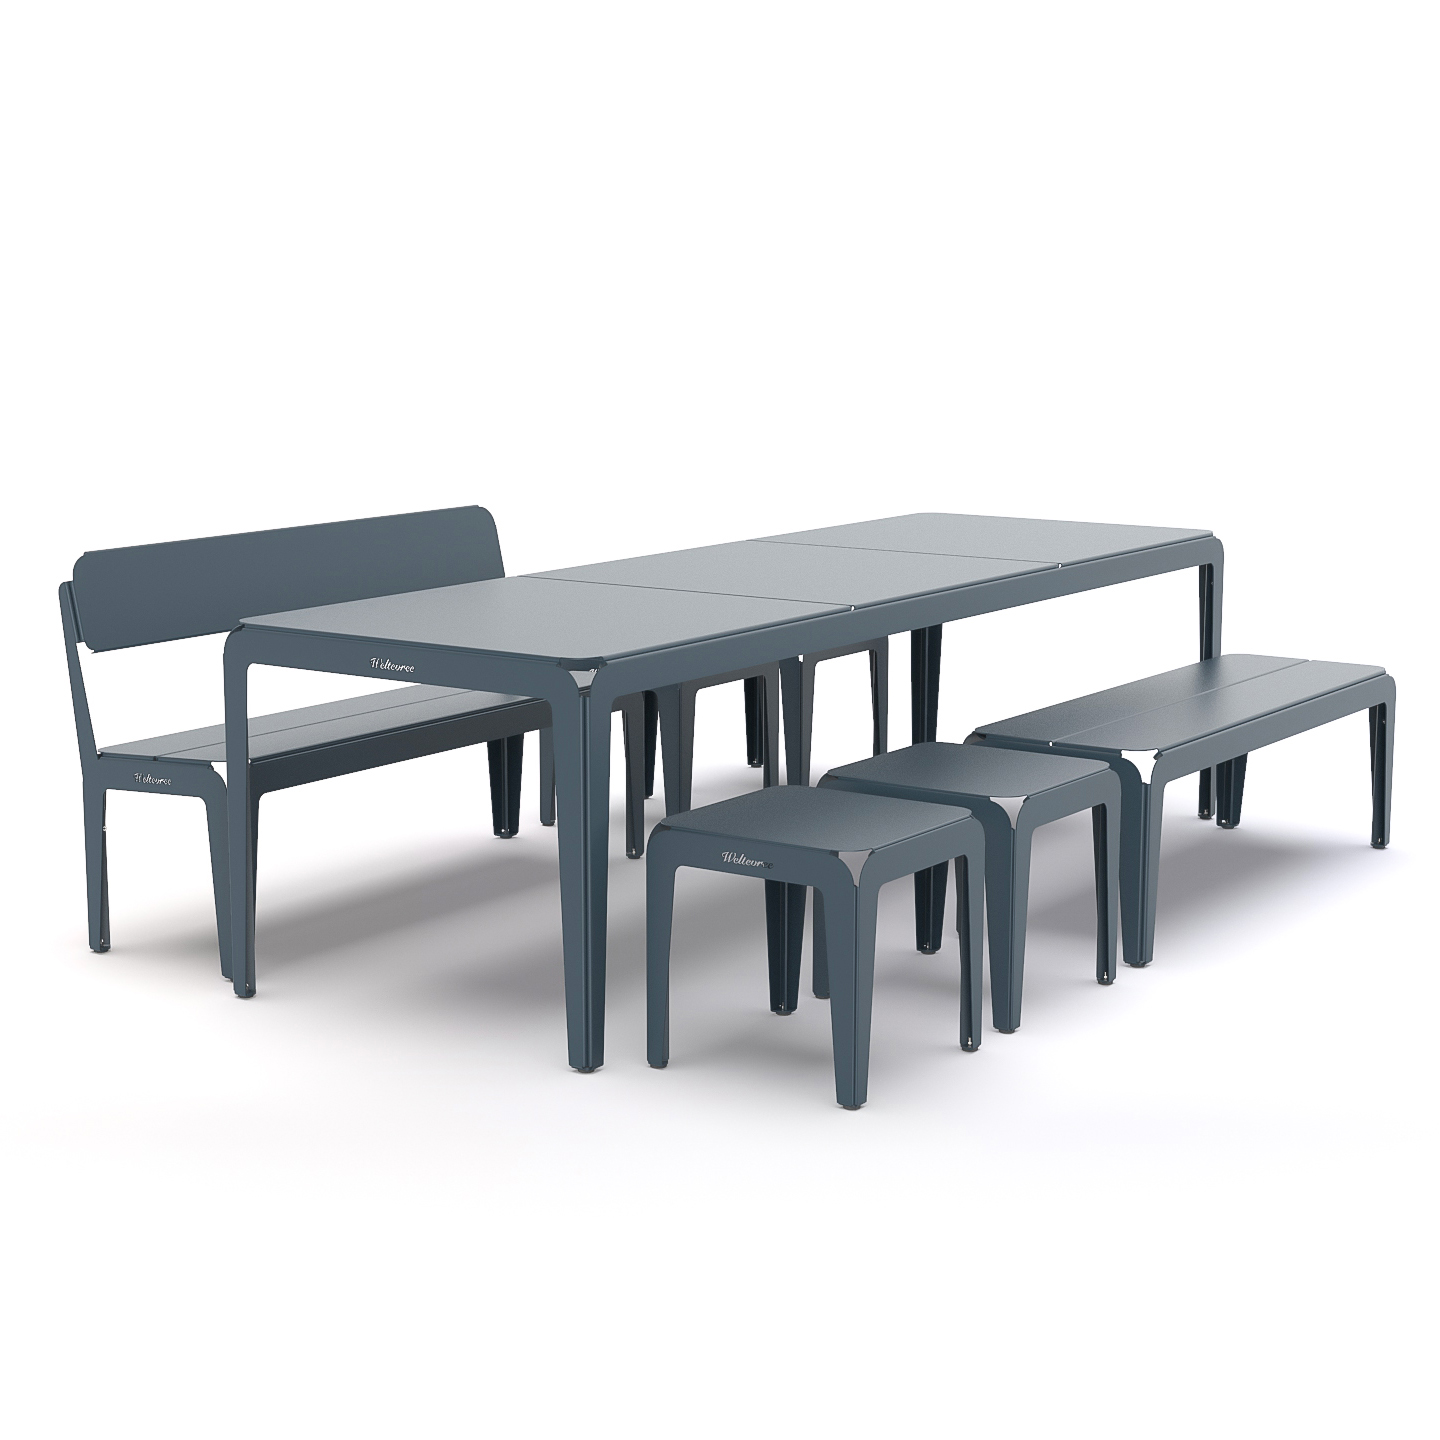 Weltevree-blue-bended-bench-table-stool